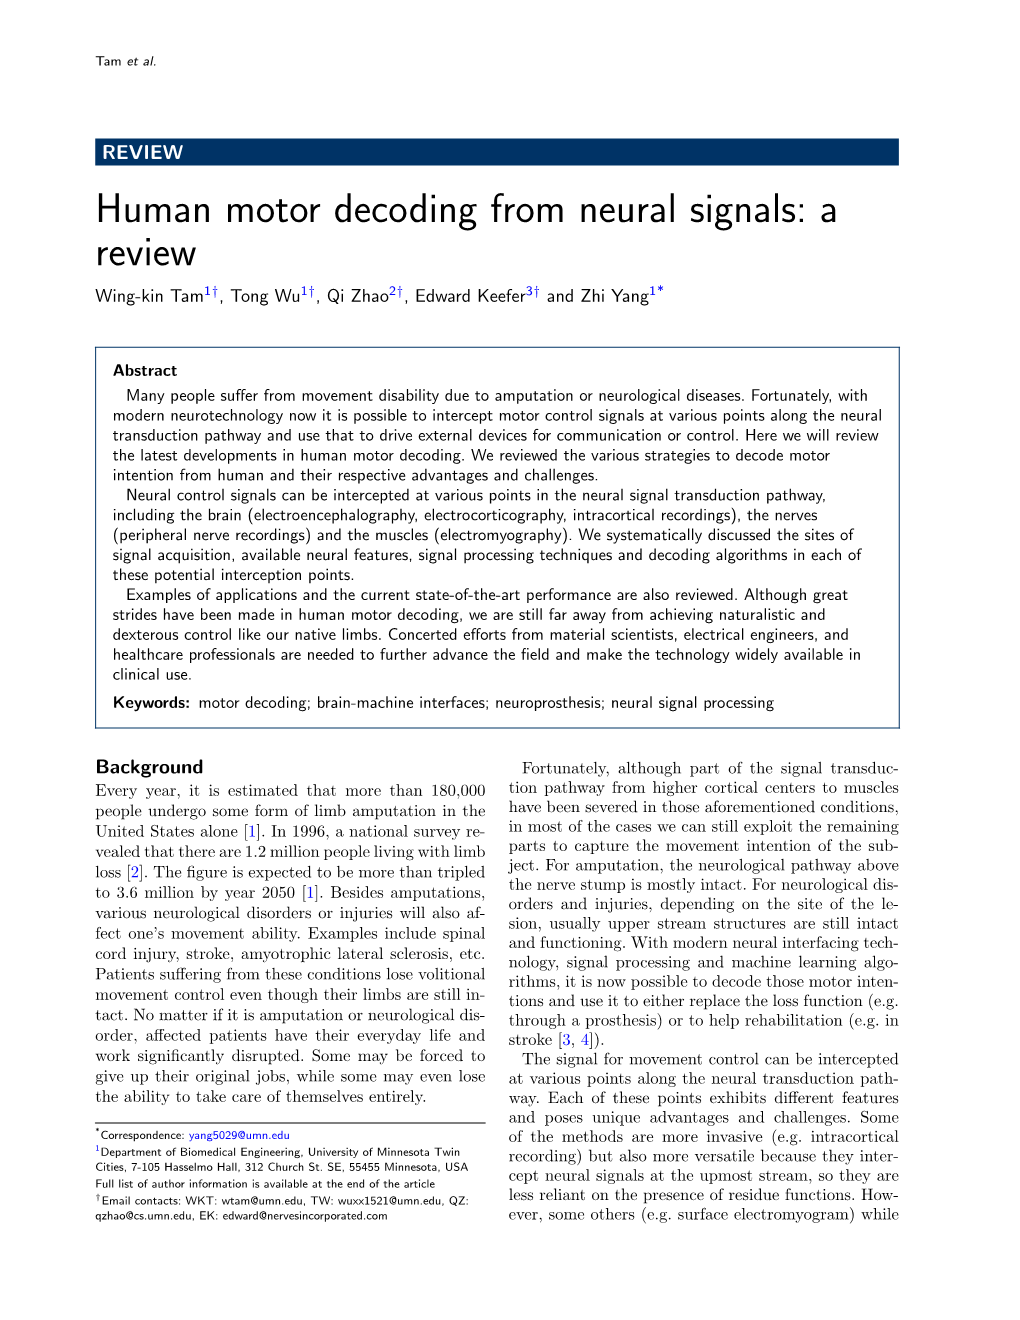 Human Motor Decoding from Neural Signals: a Review Wing-Kin Tam1†, Tong Wu1†, Qi Zhao2†, Edward Keefer3† and Zhi Yang1*